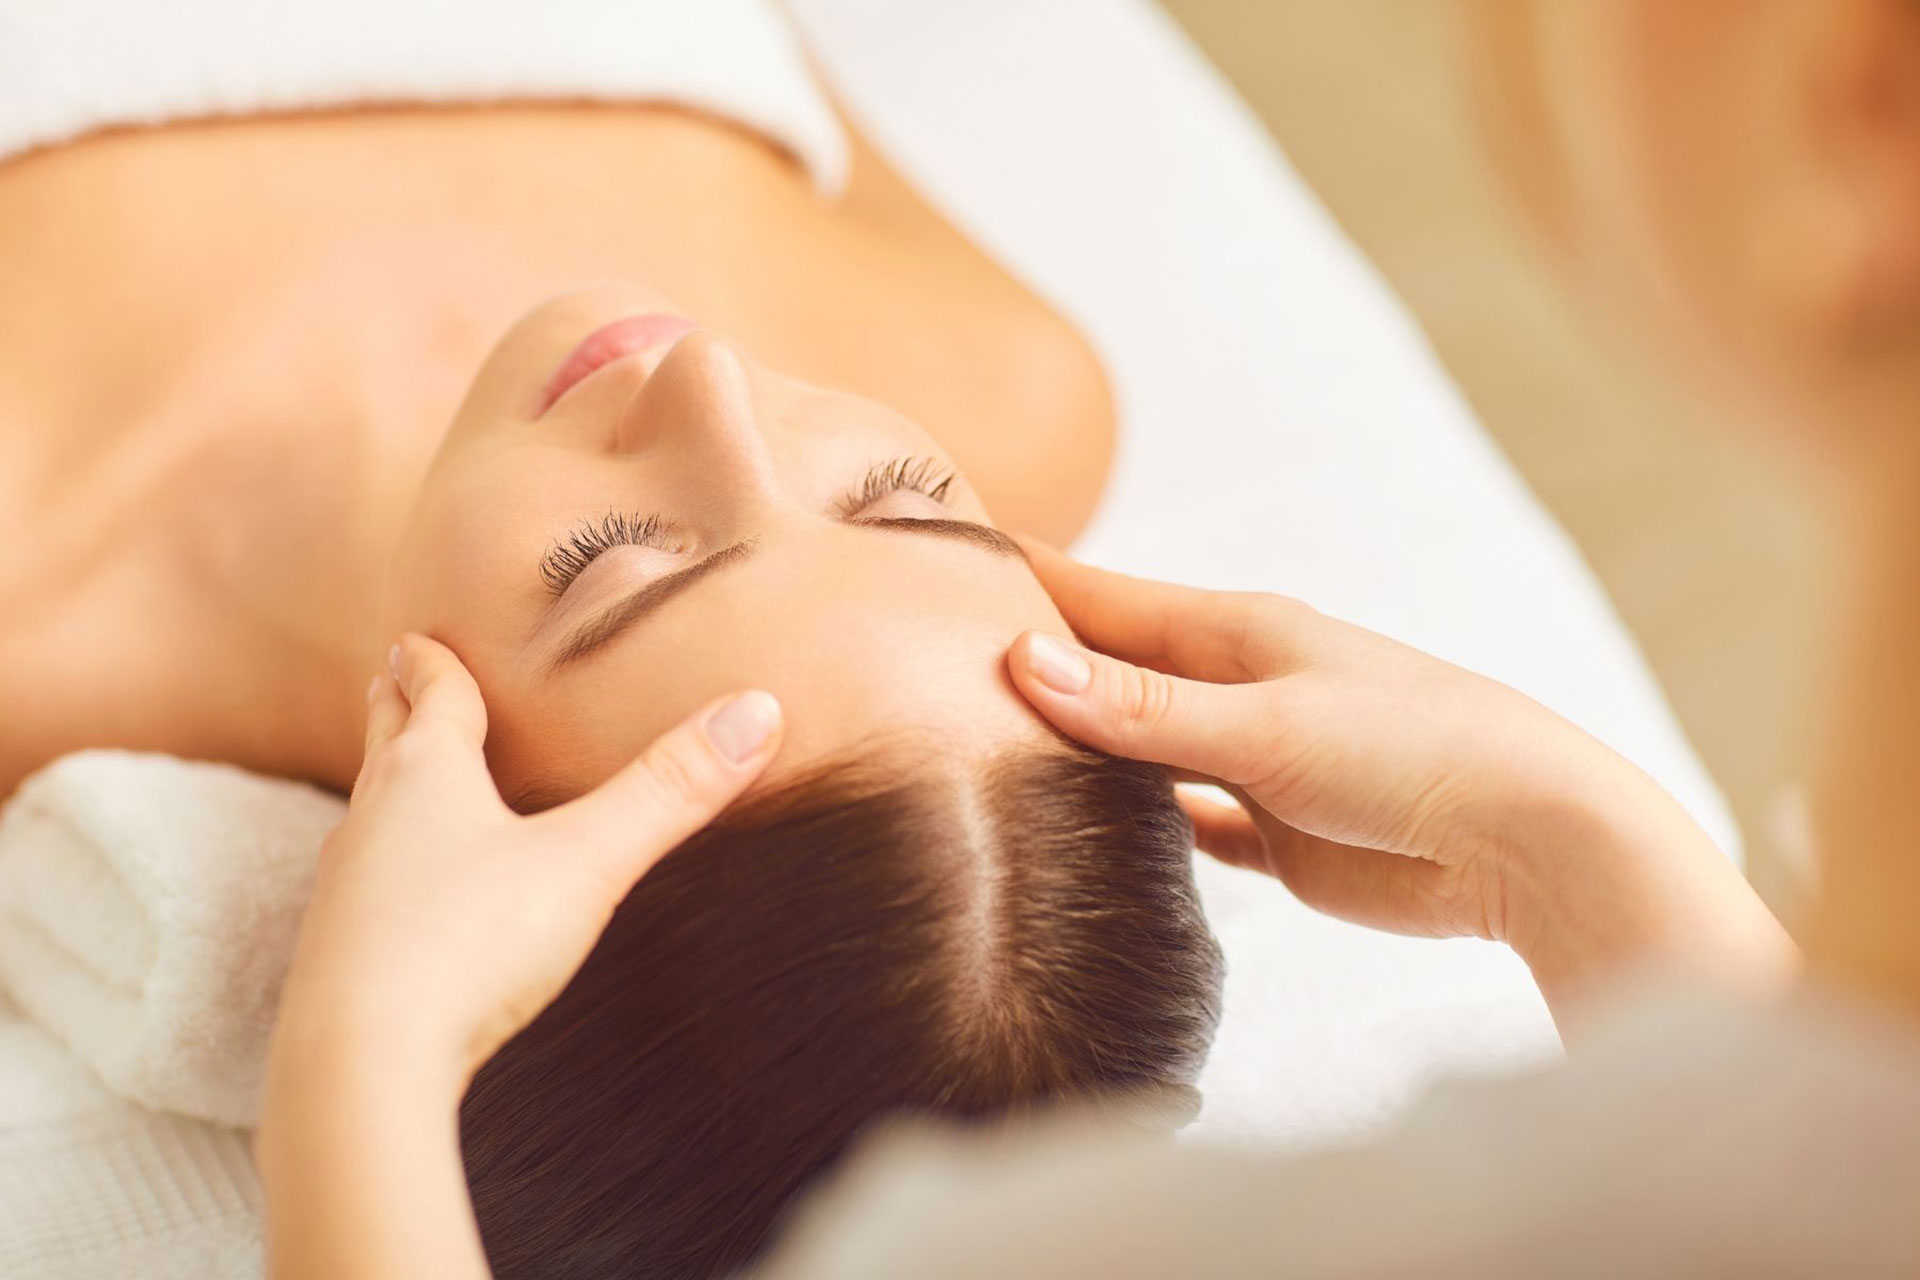 How a massage can decrease stress